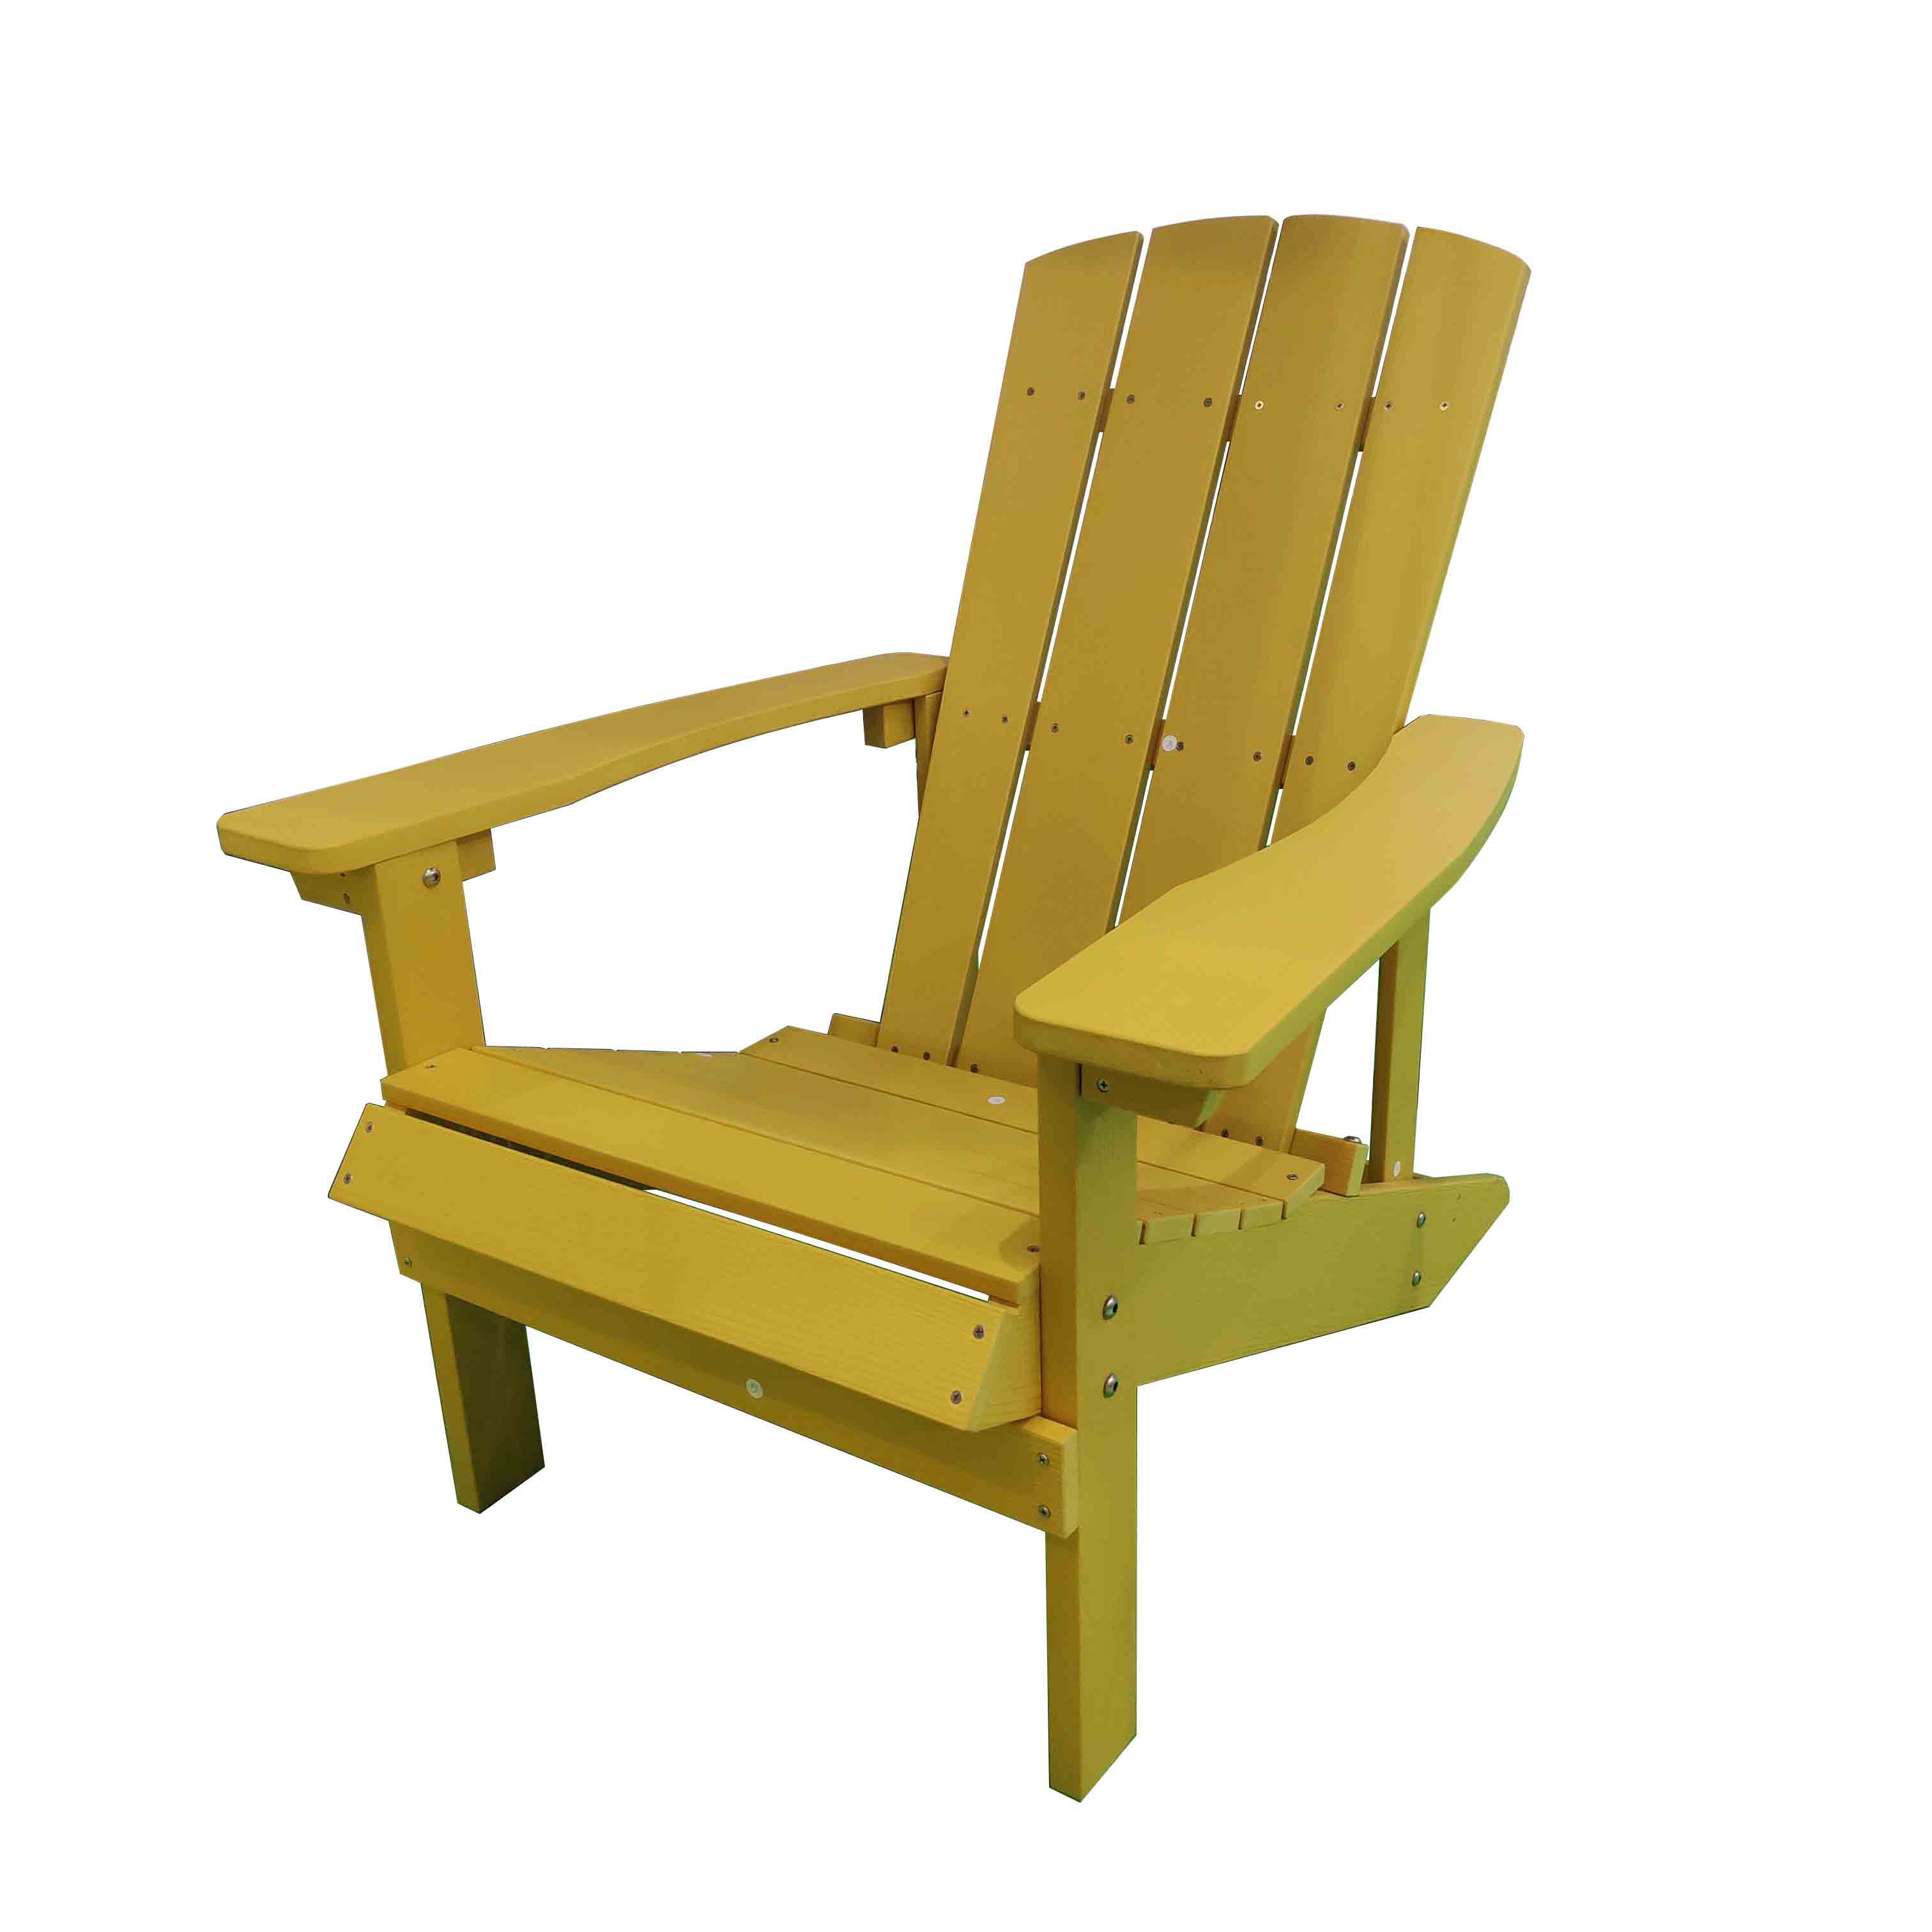 China Wholesale Aluminium Chairs Outdoor Company - JJ-C14501-YLW-GG PS wood Adirondack chair – Jin-jiang Industry